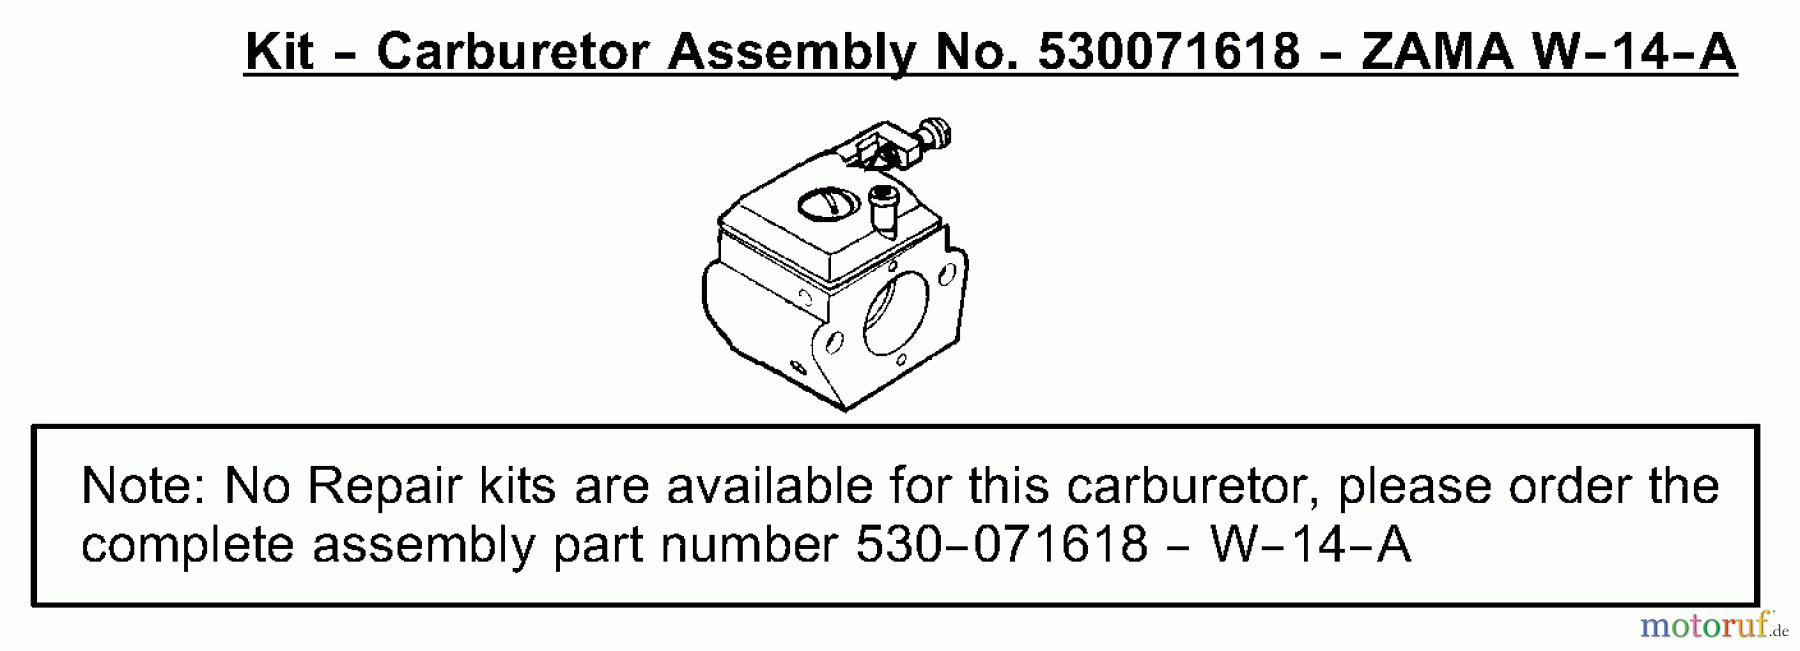  Poulan / Weed Eater Motorsägen 2155 (Type 2) - Poulan Plus Chainsaw Carburetor Assembly (Zama W-14-A) P/N 530071618